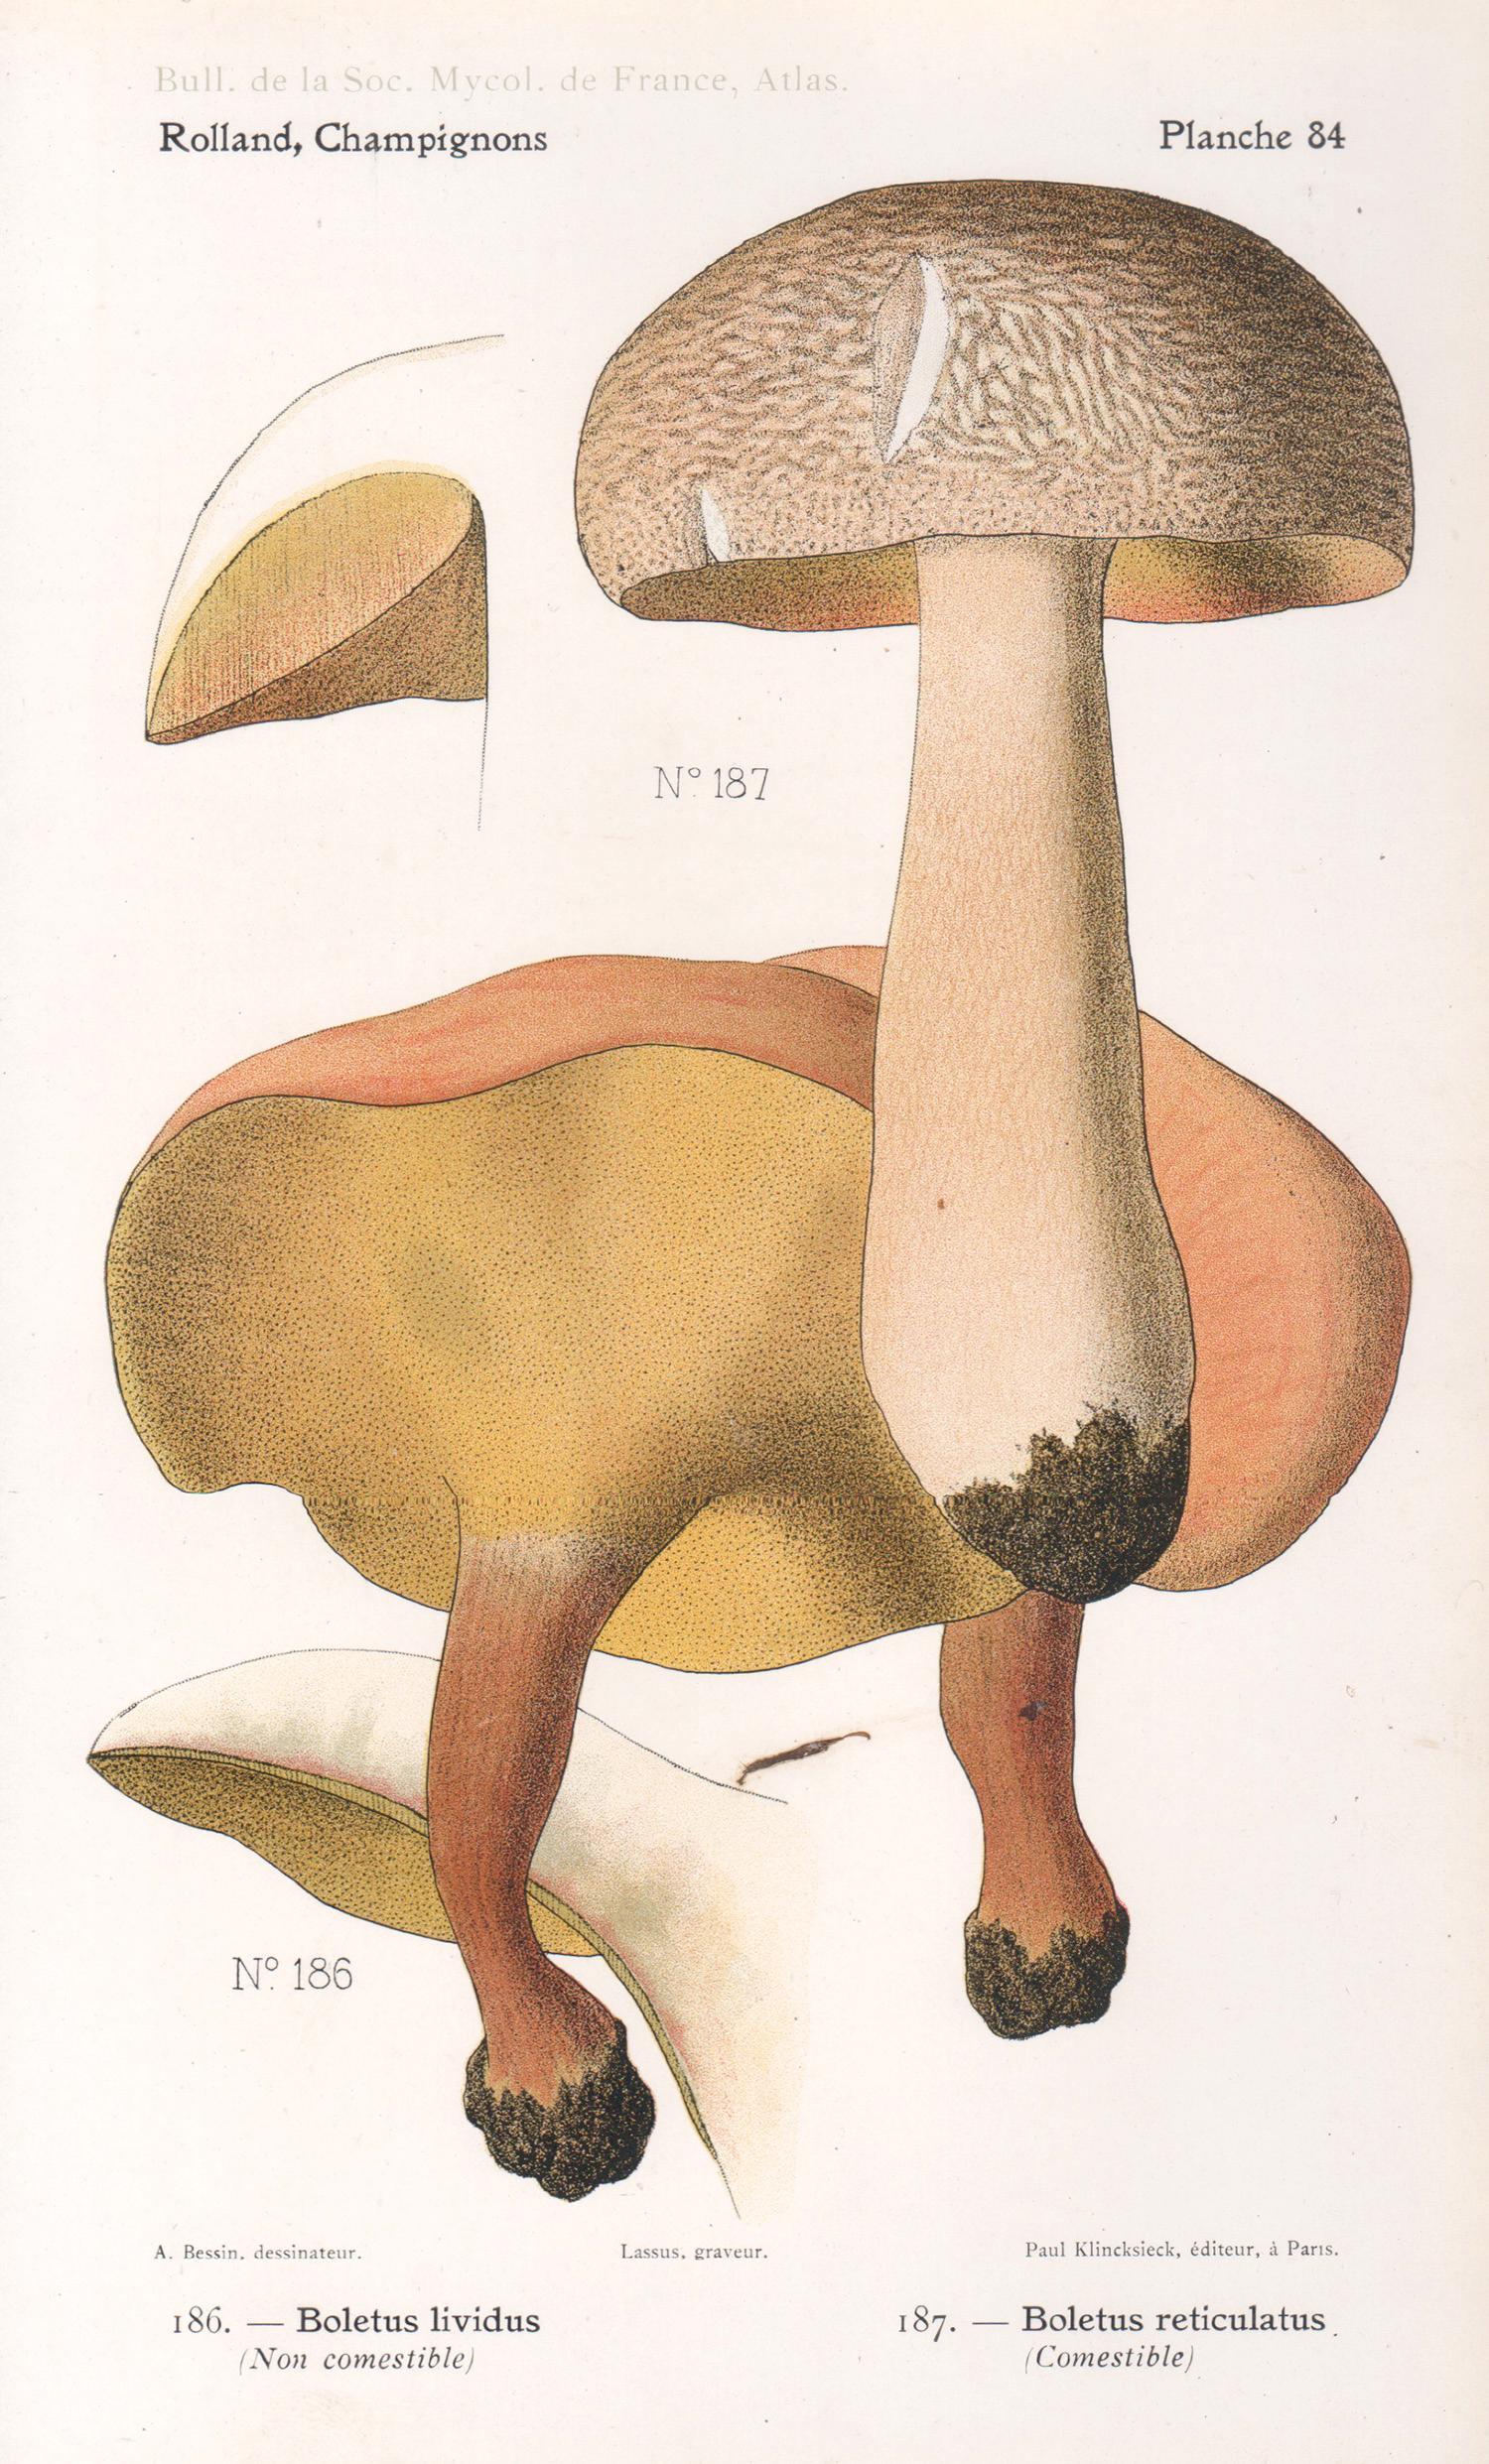 Lassus after Aimé Bessin Print – Champignons, Französische chromolithographie antiker Pilz fungi, 1910